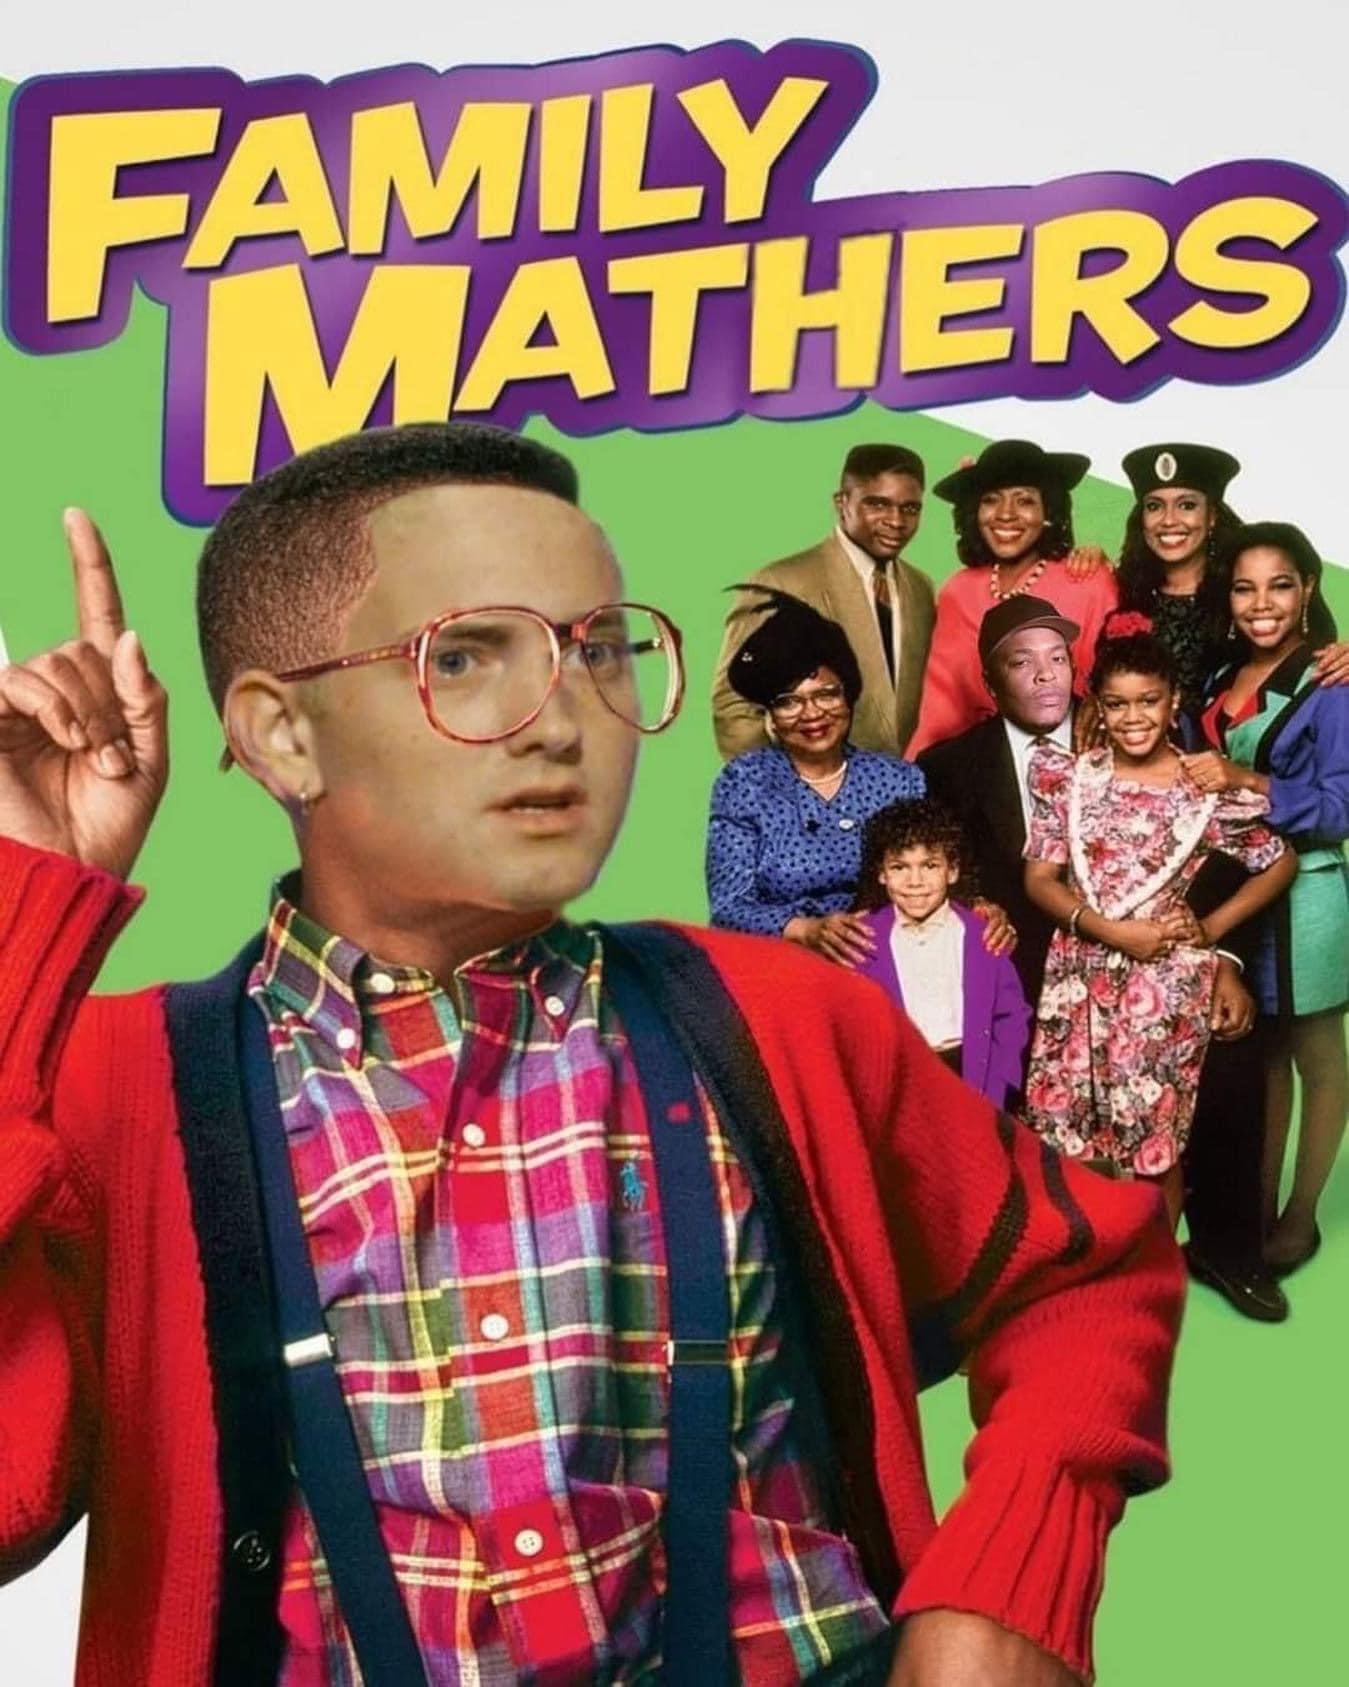 dank memes - family matters writers - Family Mathers